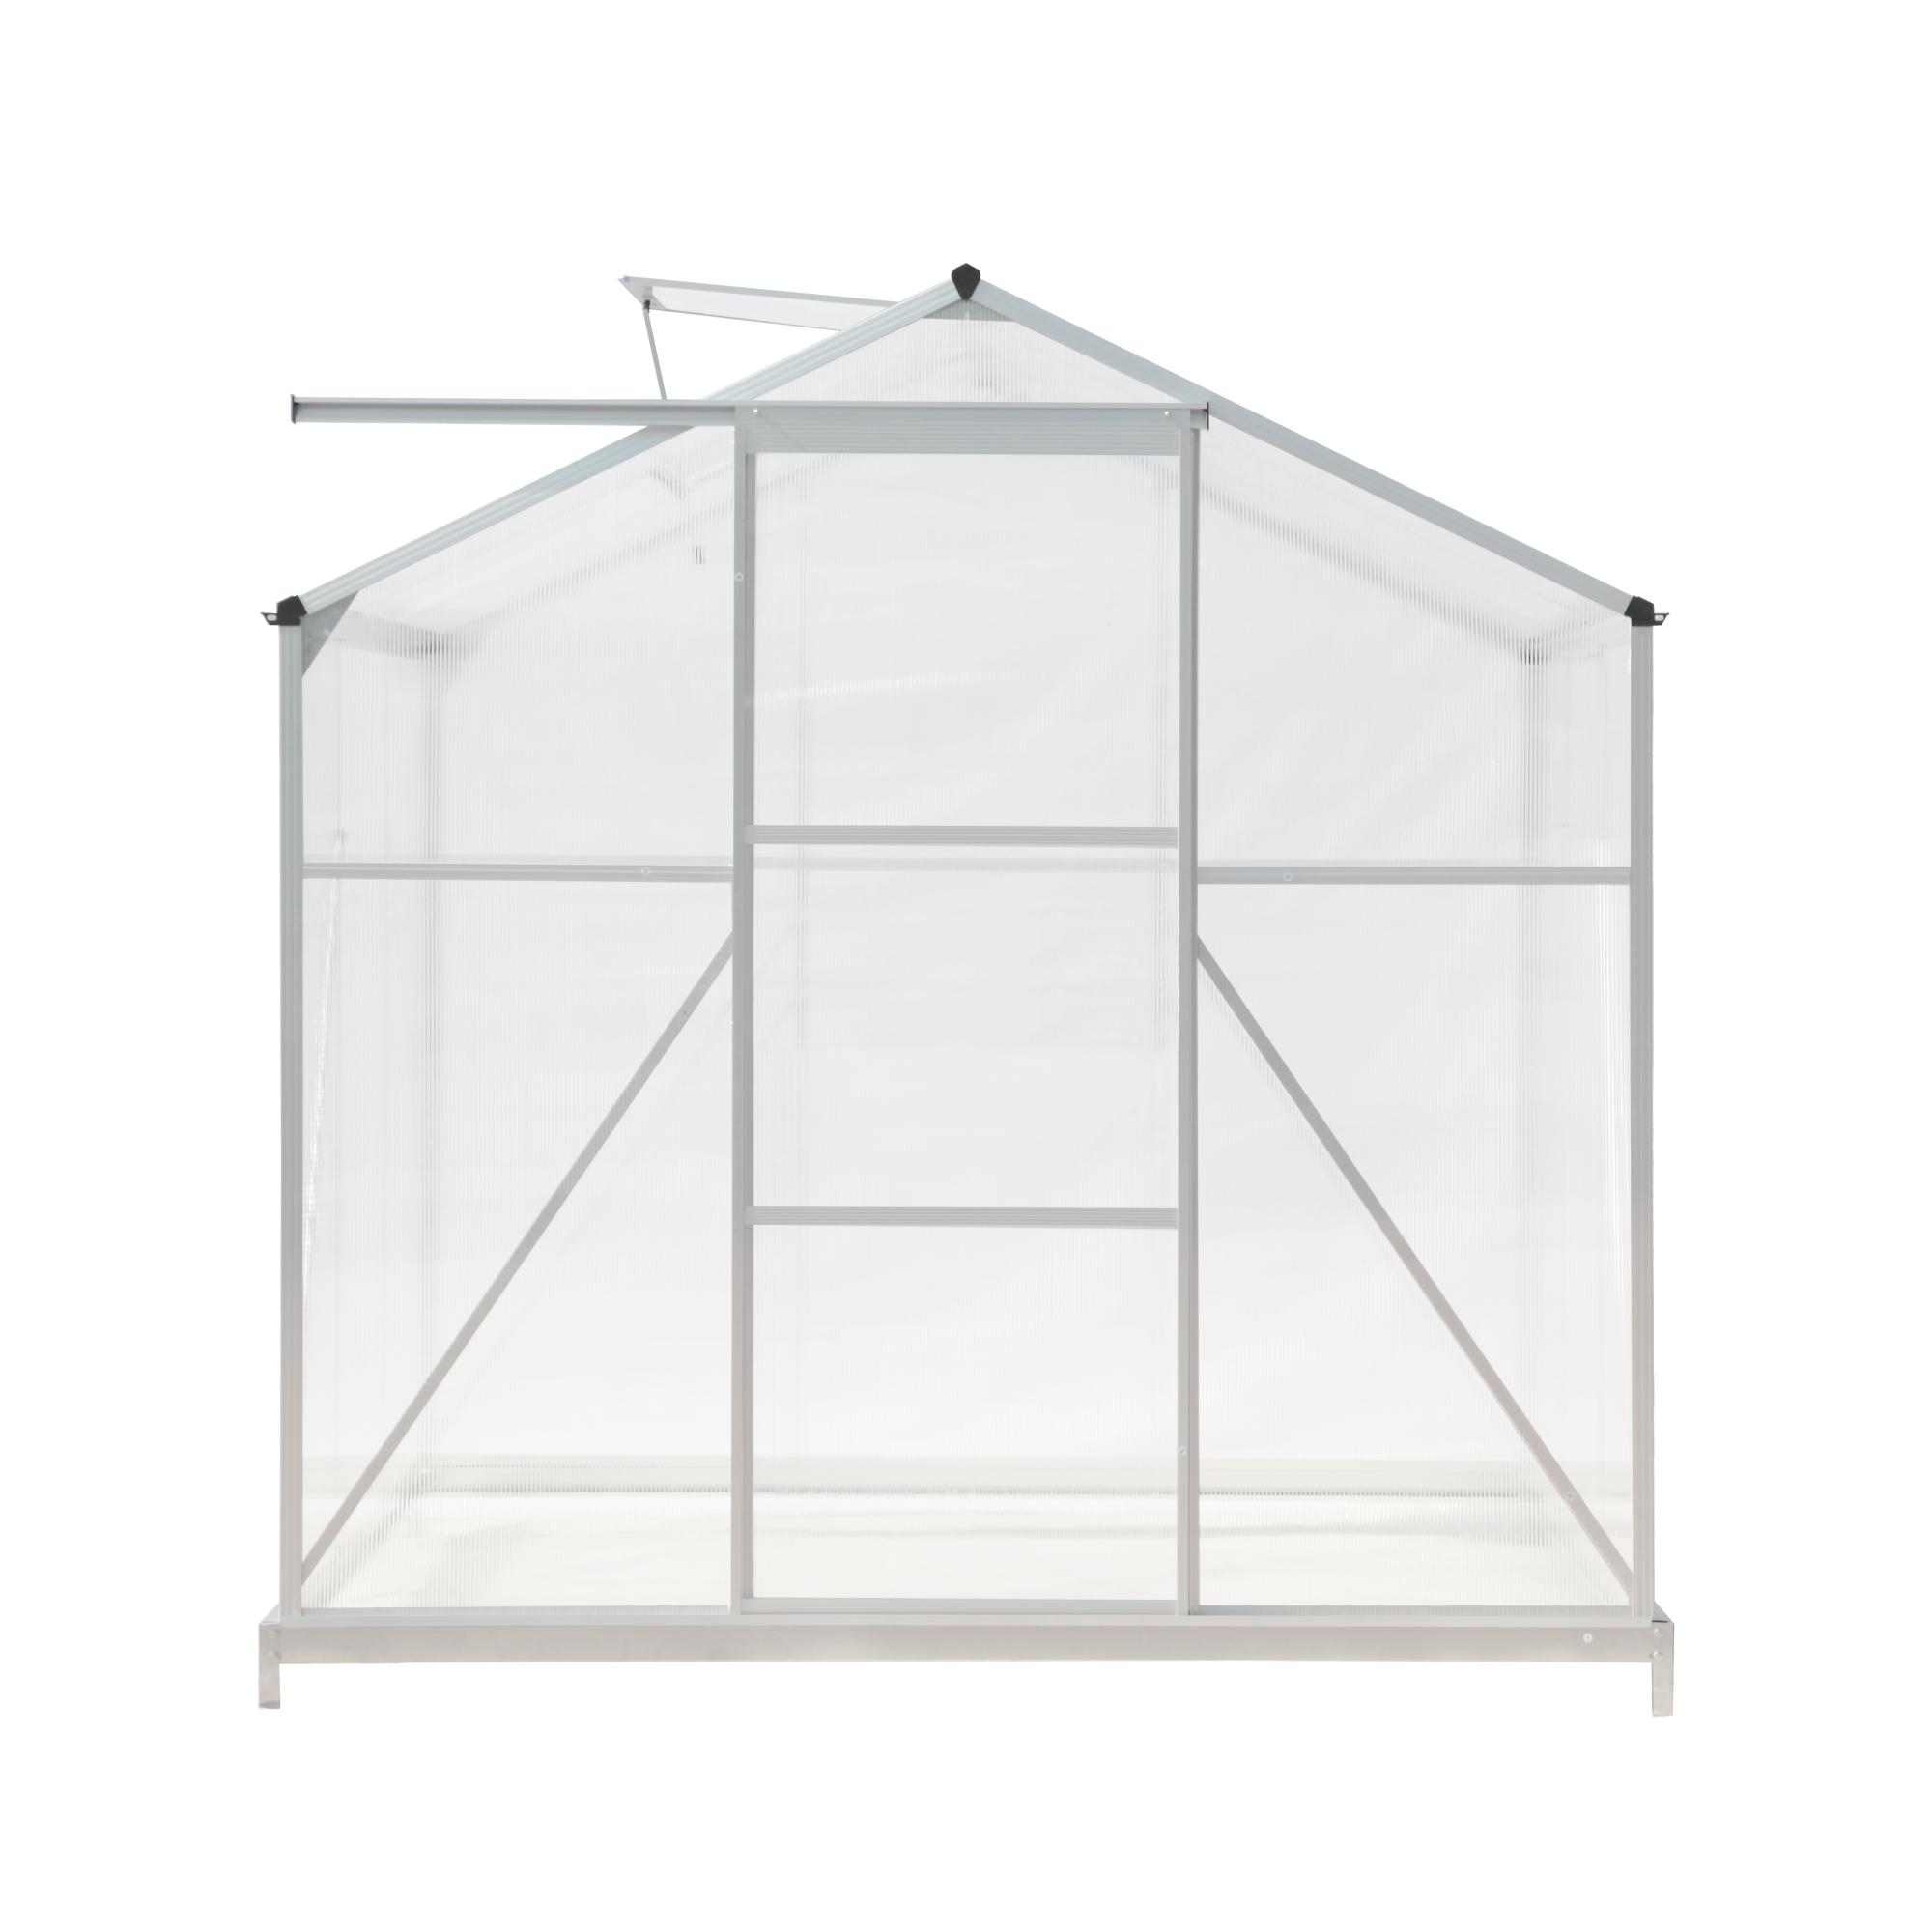 6*6 Greenhouse metal frame